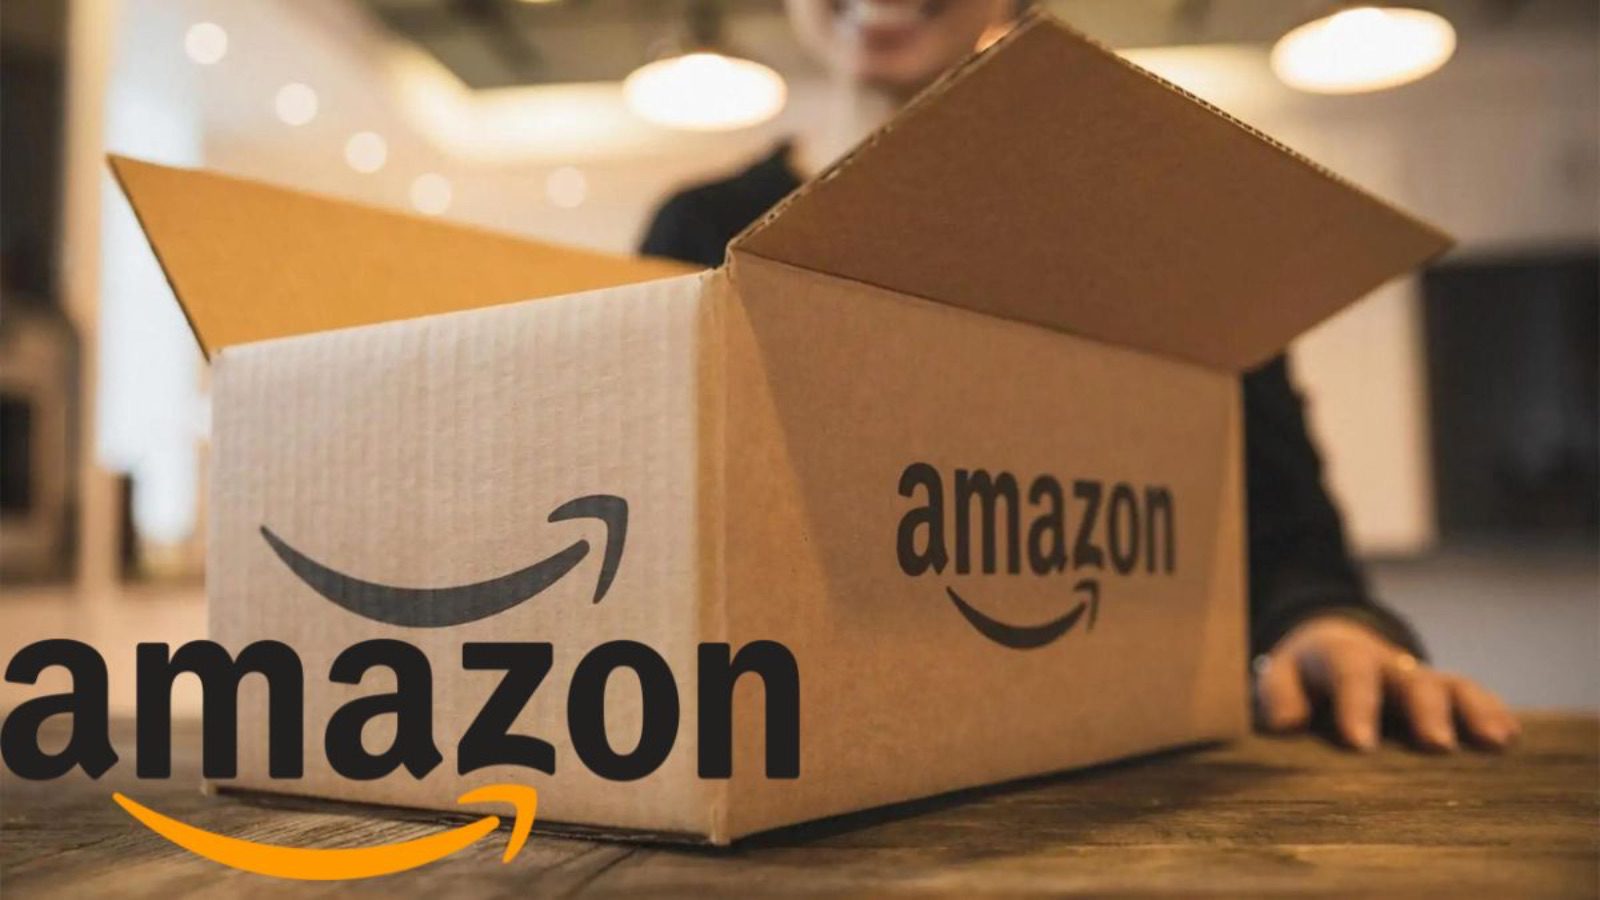 Amazon batte Unieuro con offerte PAZZE, tecnologia gratis oggi